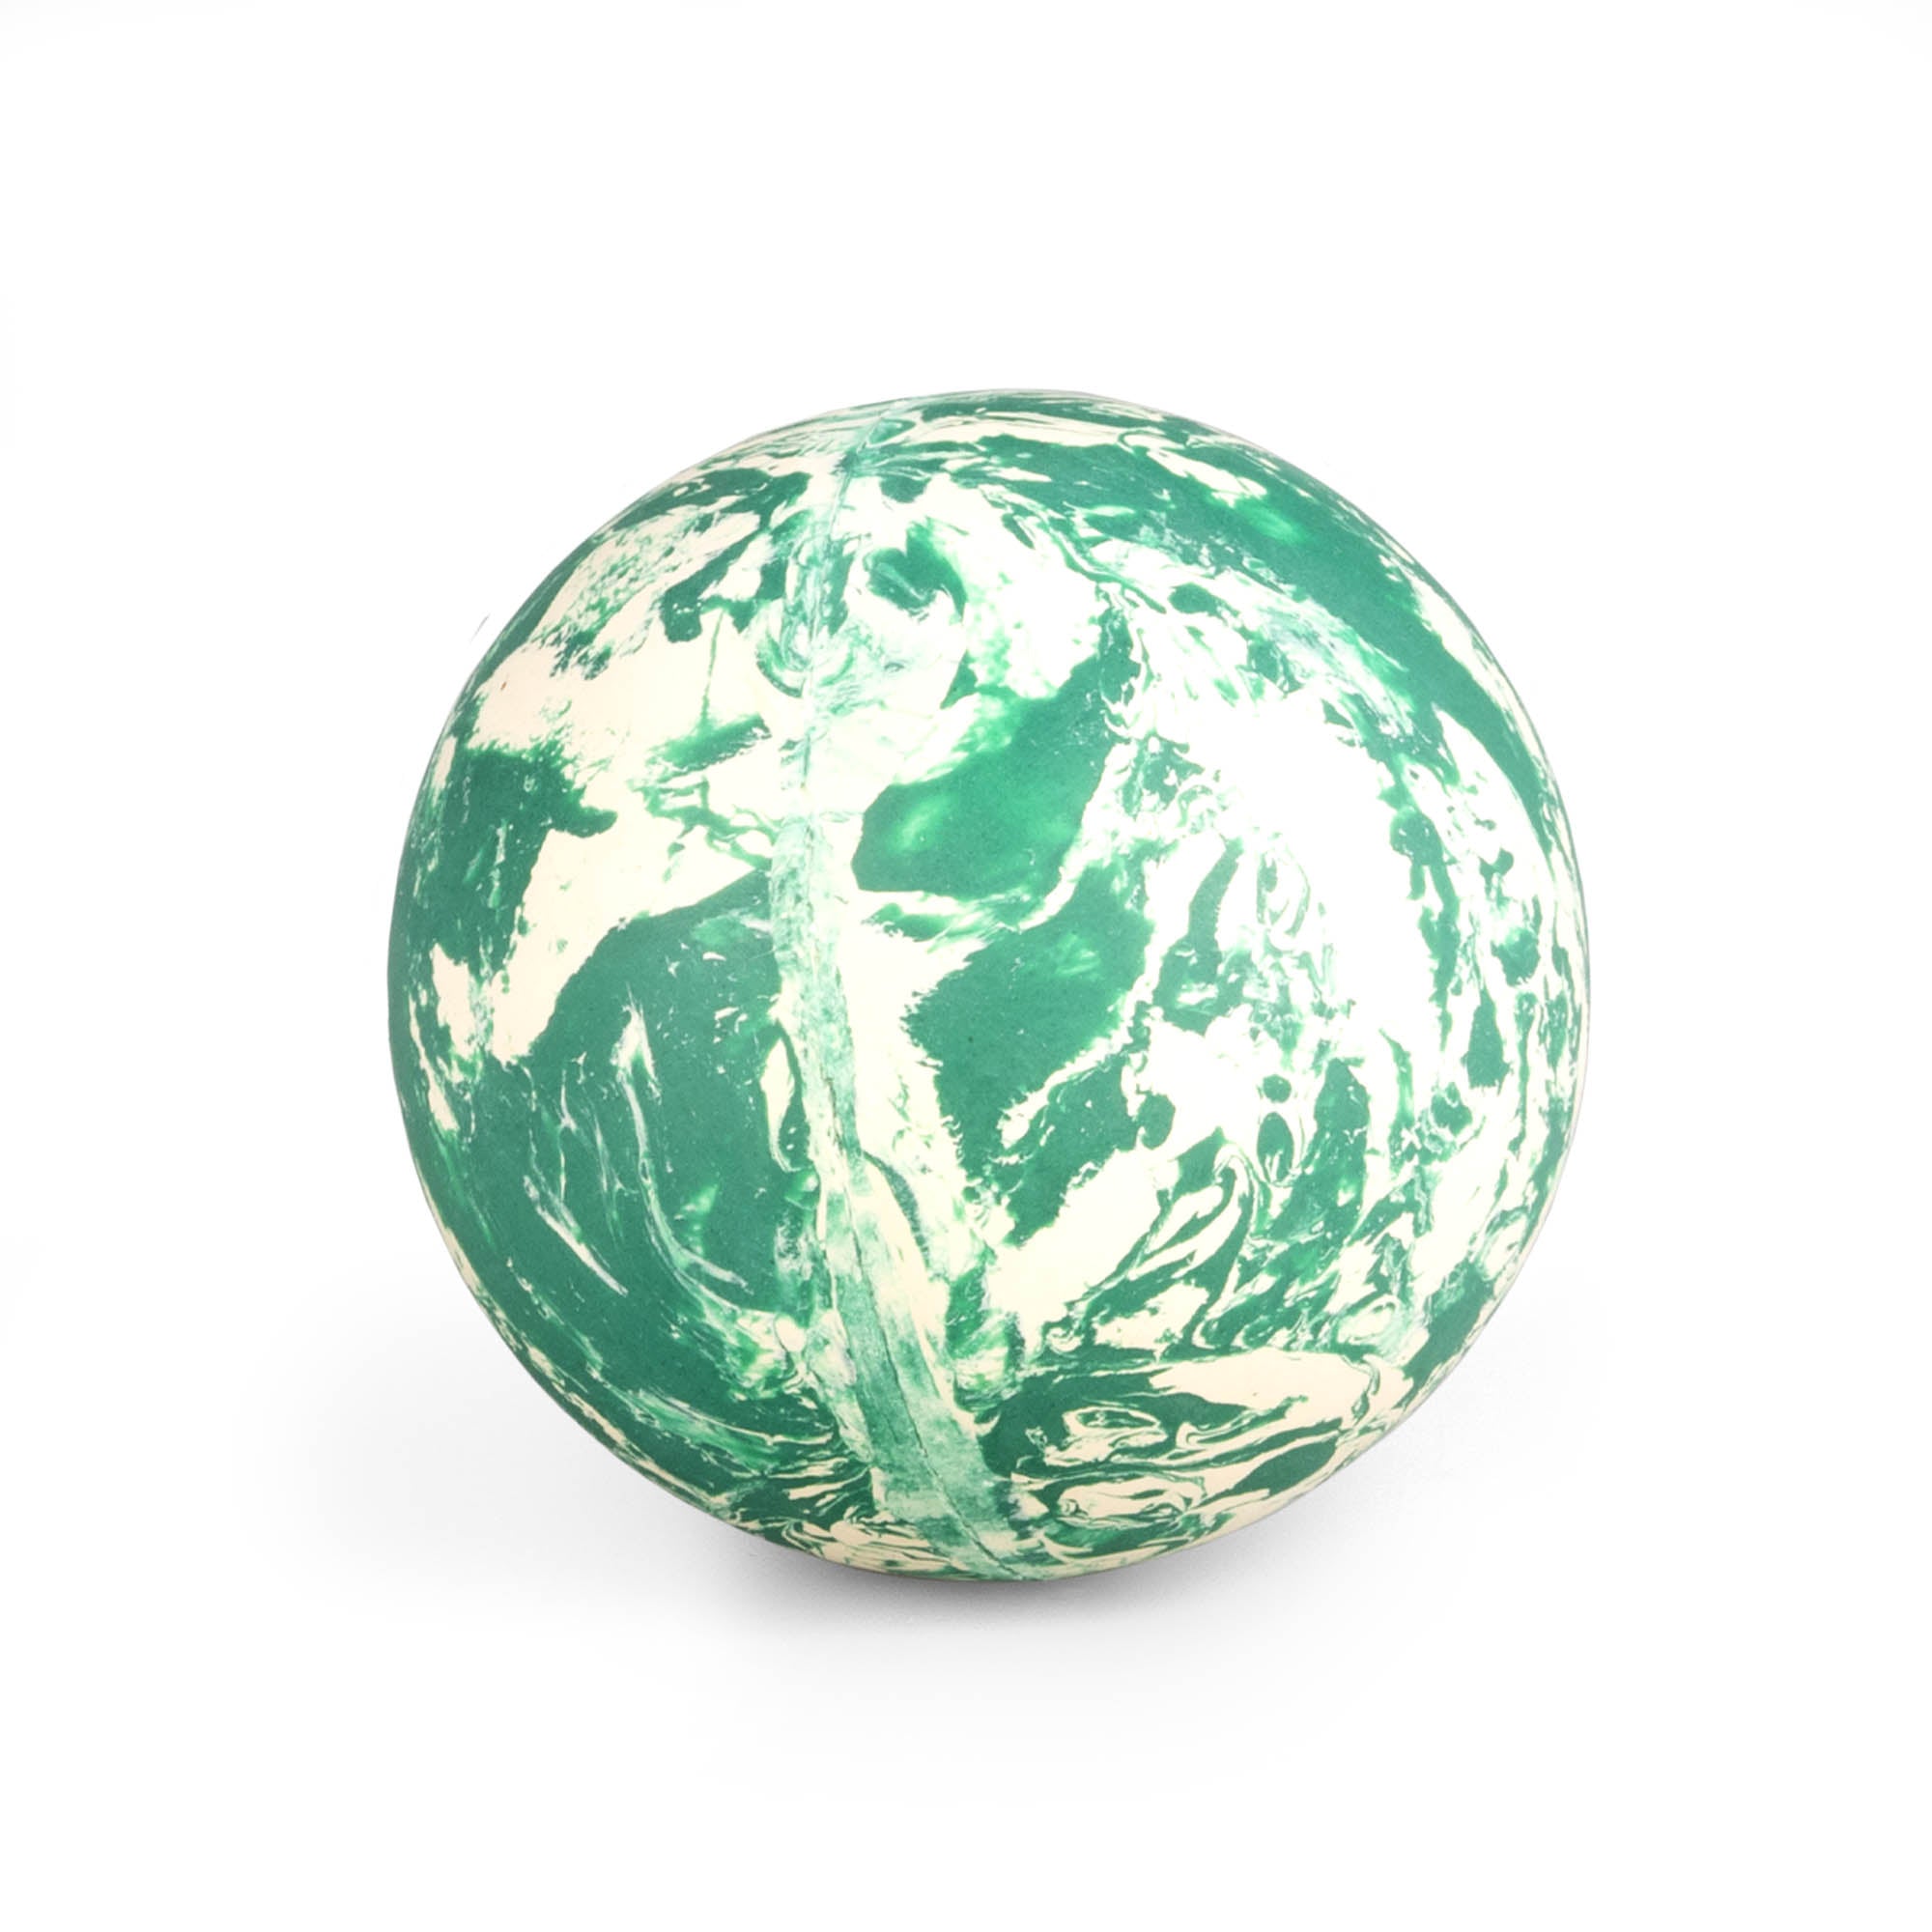 Single green oddballs bounce ball